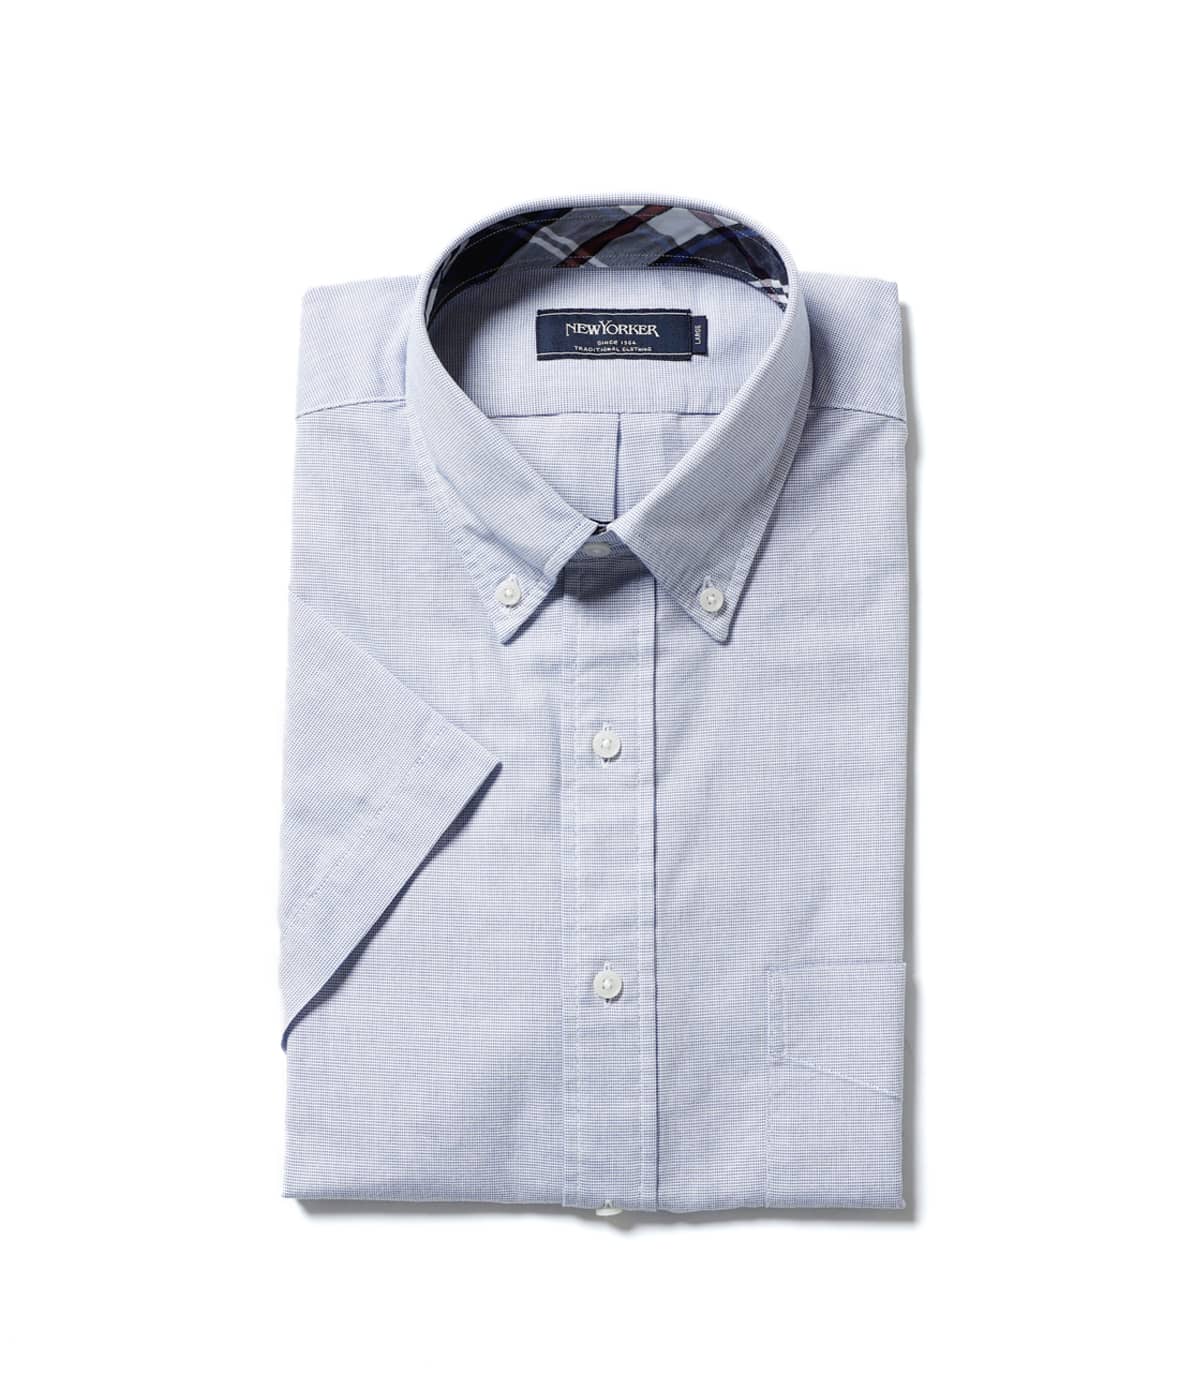 【COOL COMFORT(吸水速乾)】シャンブレーピンチェック 半袖ショートボタンダウンシャツ